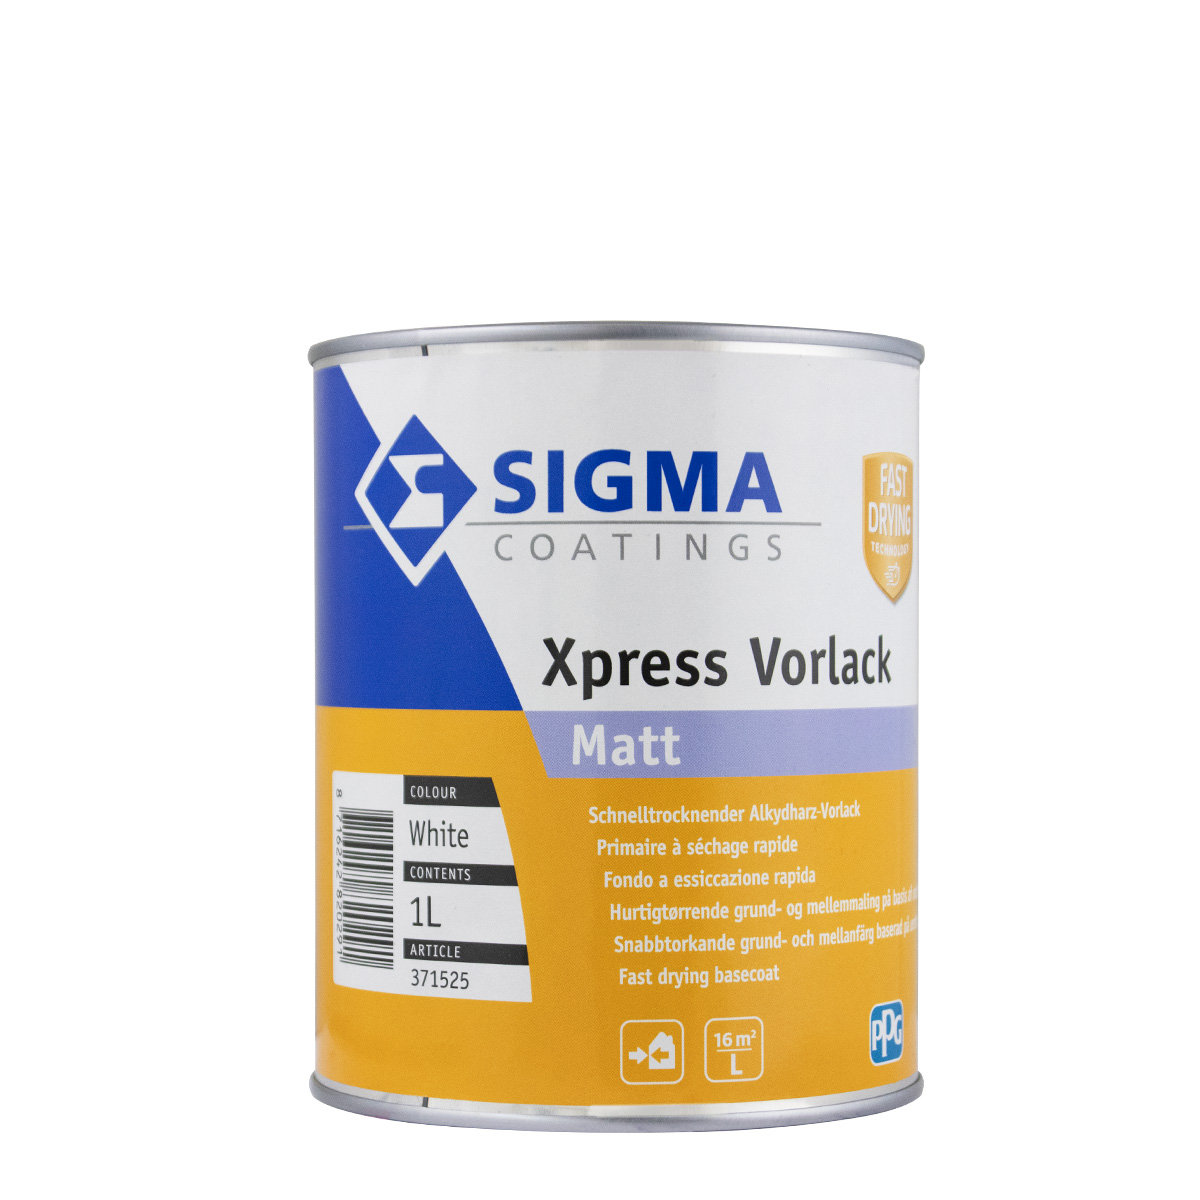 Sigma_Xpress_vorlack_matt_1l_gross